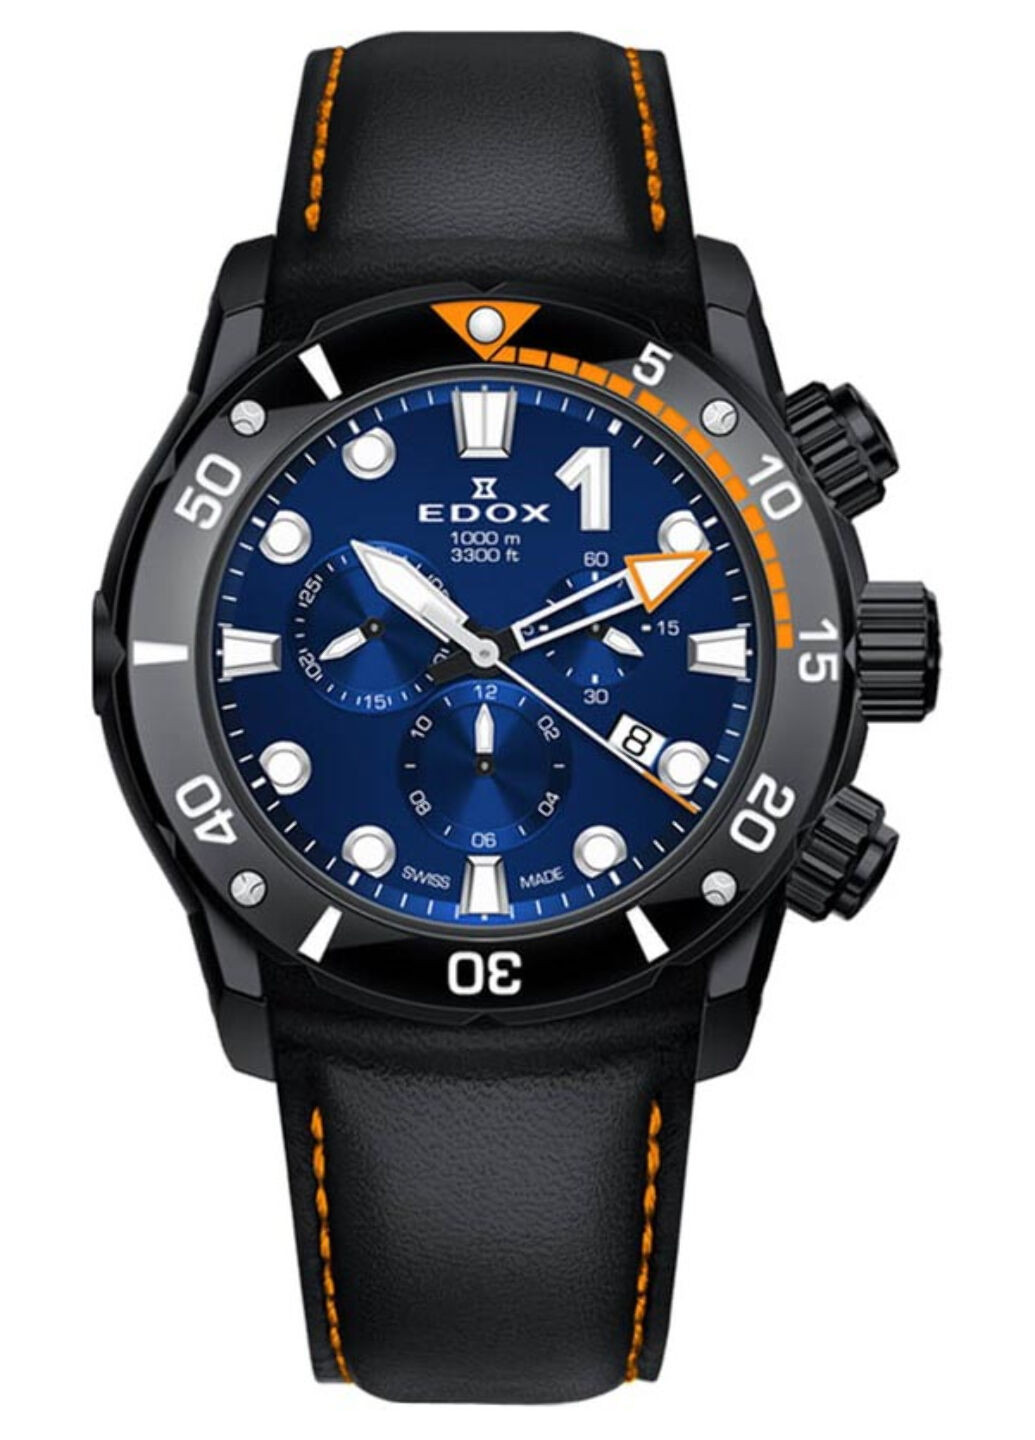 Часы наручные Edox 10242 tinno buin class 1 titanium 45mm (272127317)